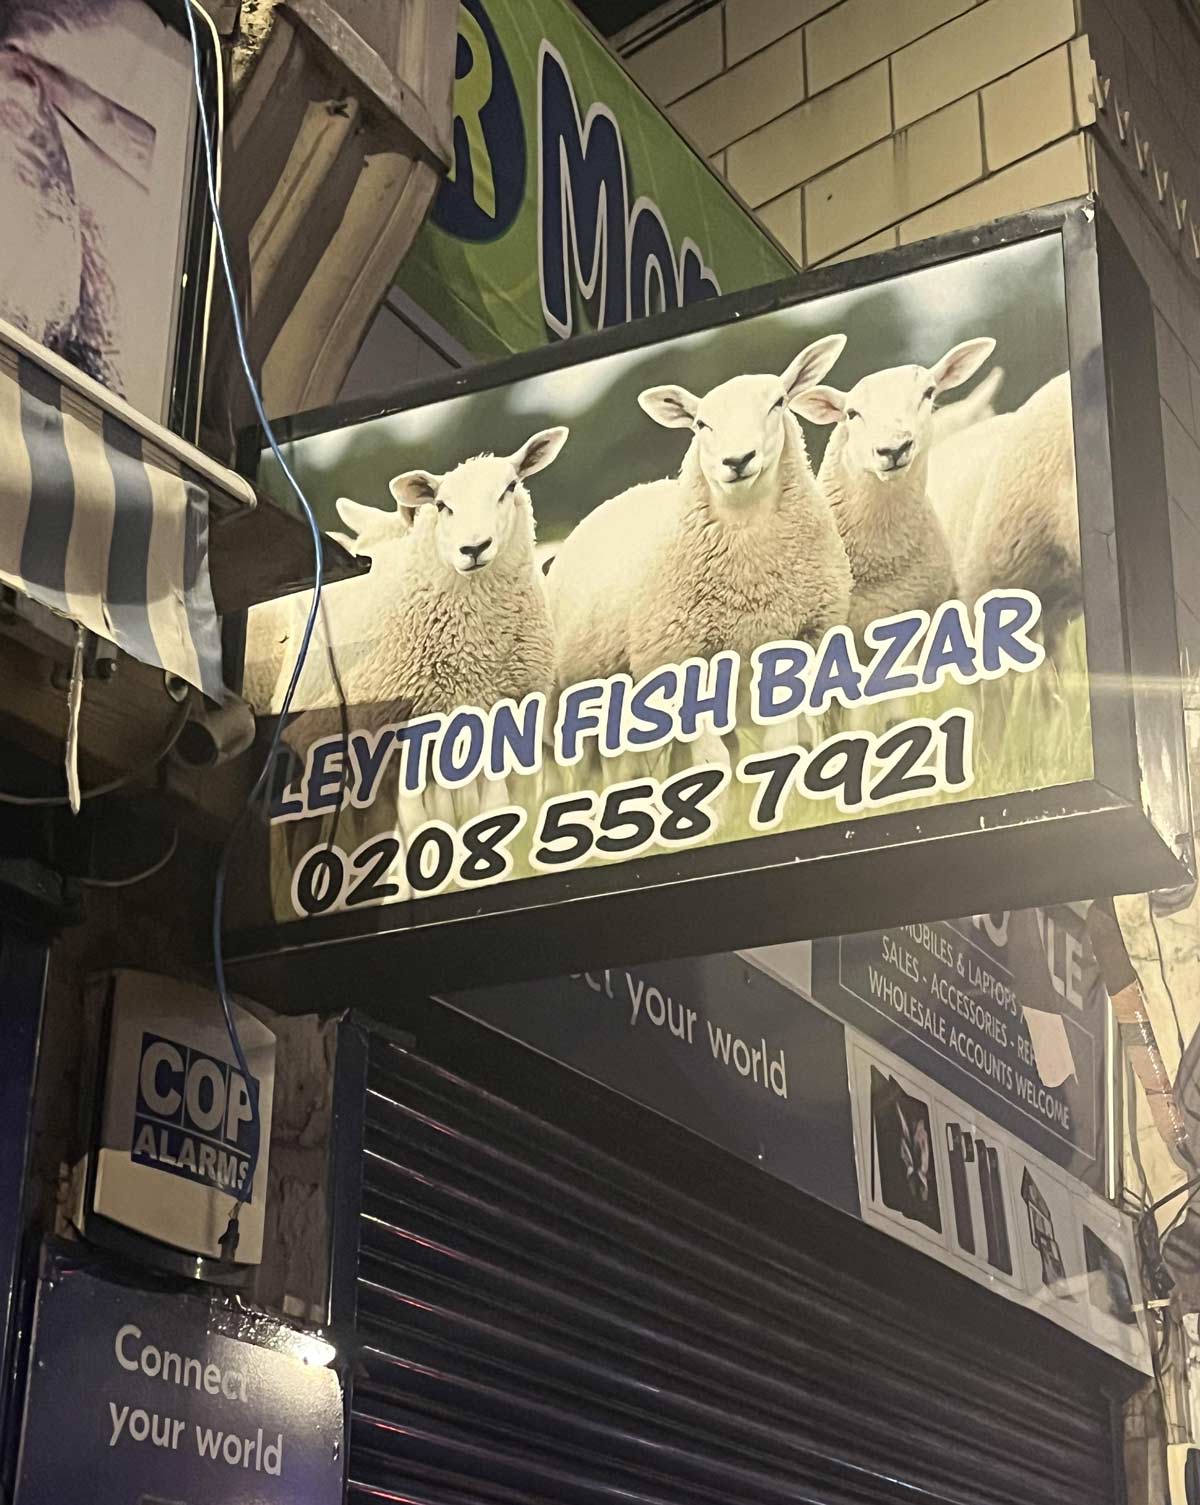 Leyton Fish Bazar